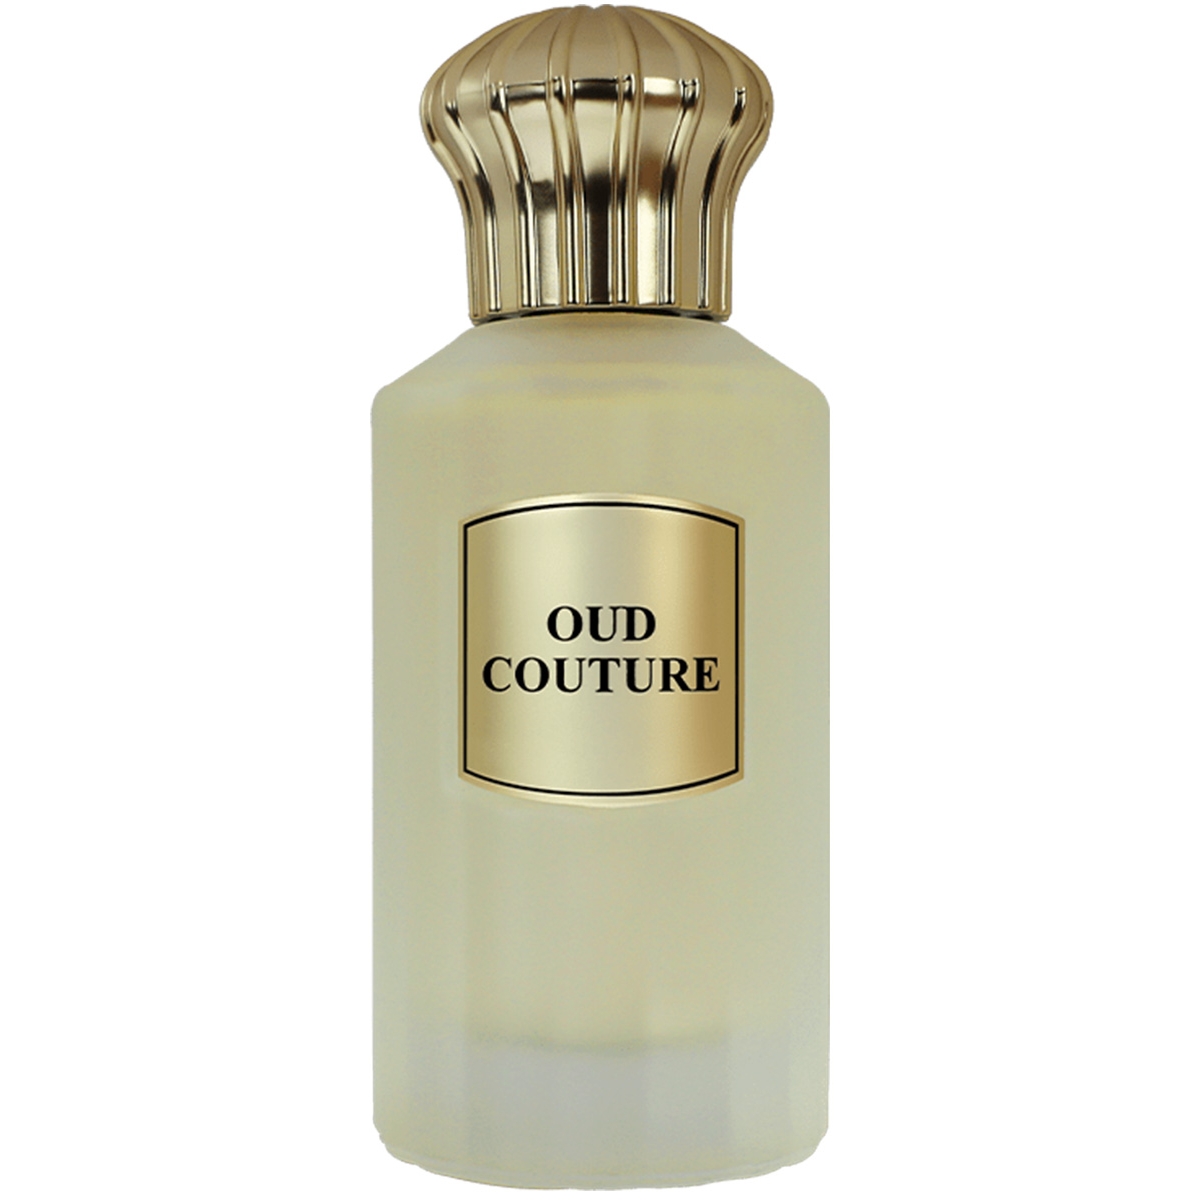 Oud Couture Ahmed al Maghribi Perfumes Perfumes, Unisex Perfumes, Arada Perfumes